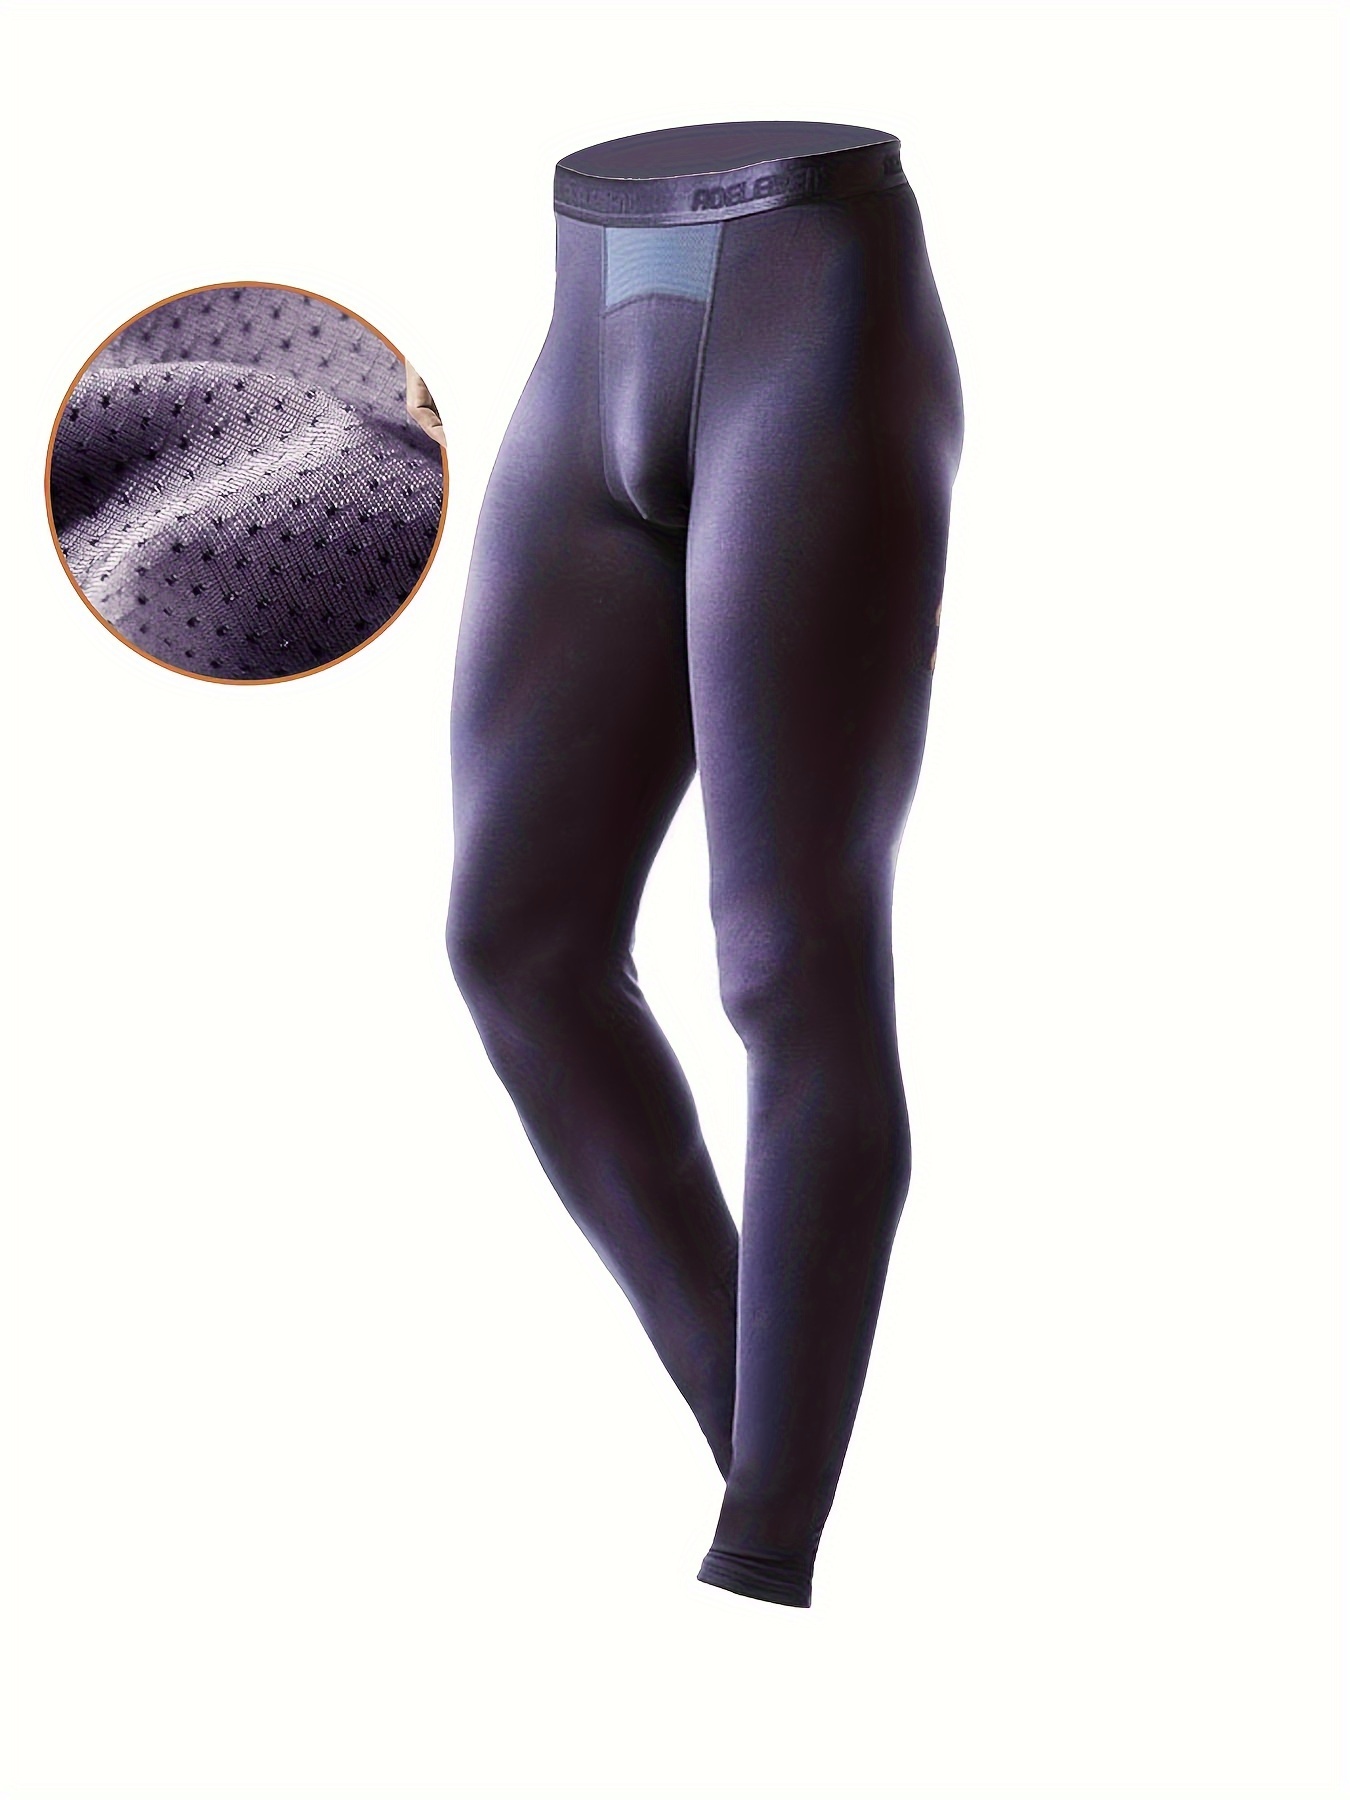 Ouruikia Men's Thermal Underwear Pants Modal Thermal Bottoms Long